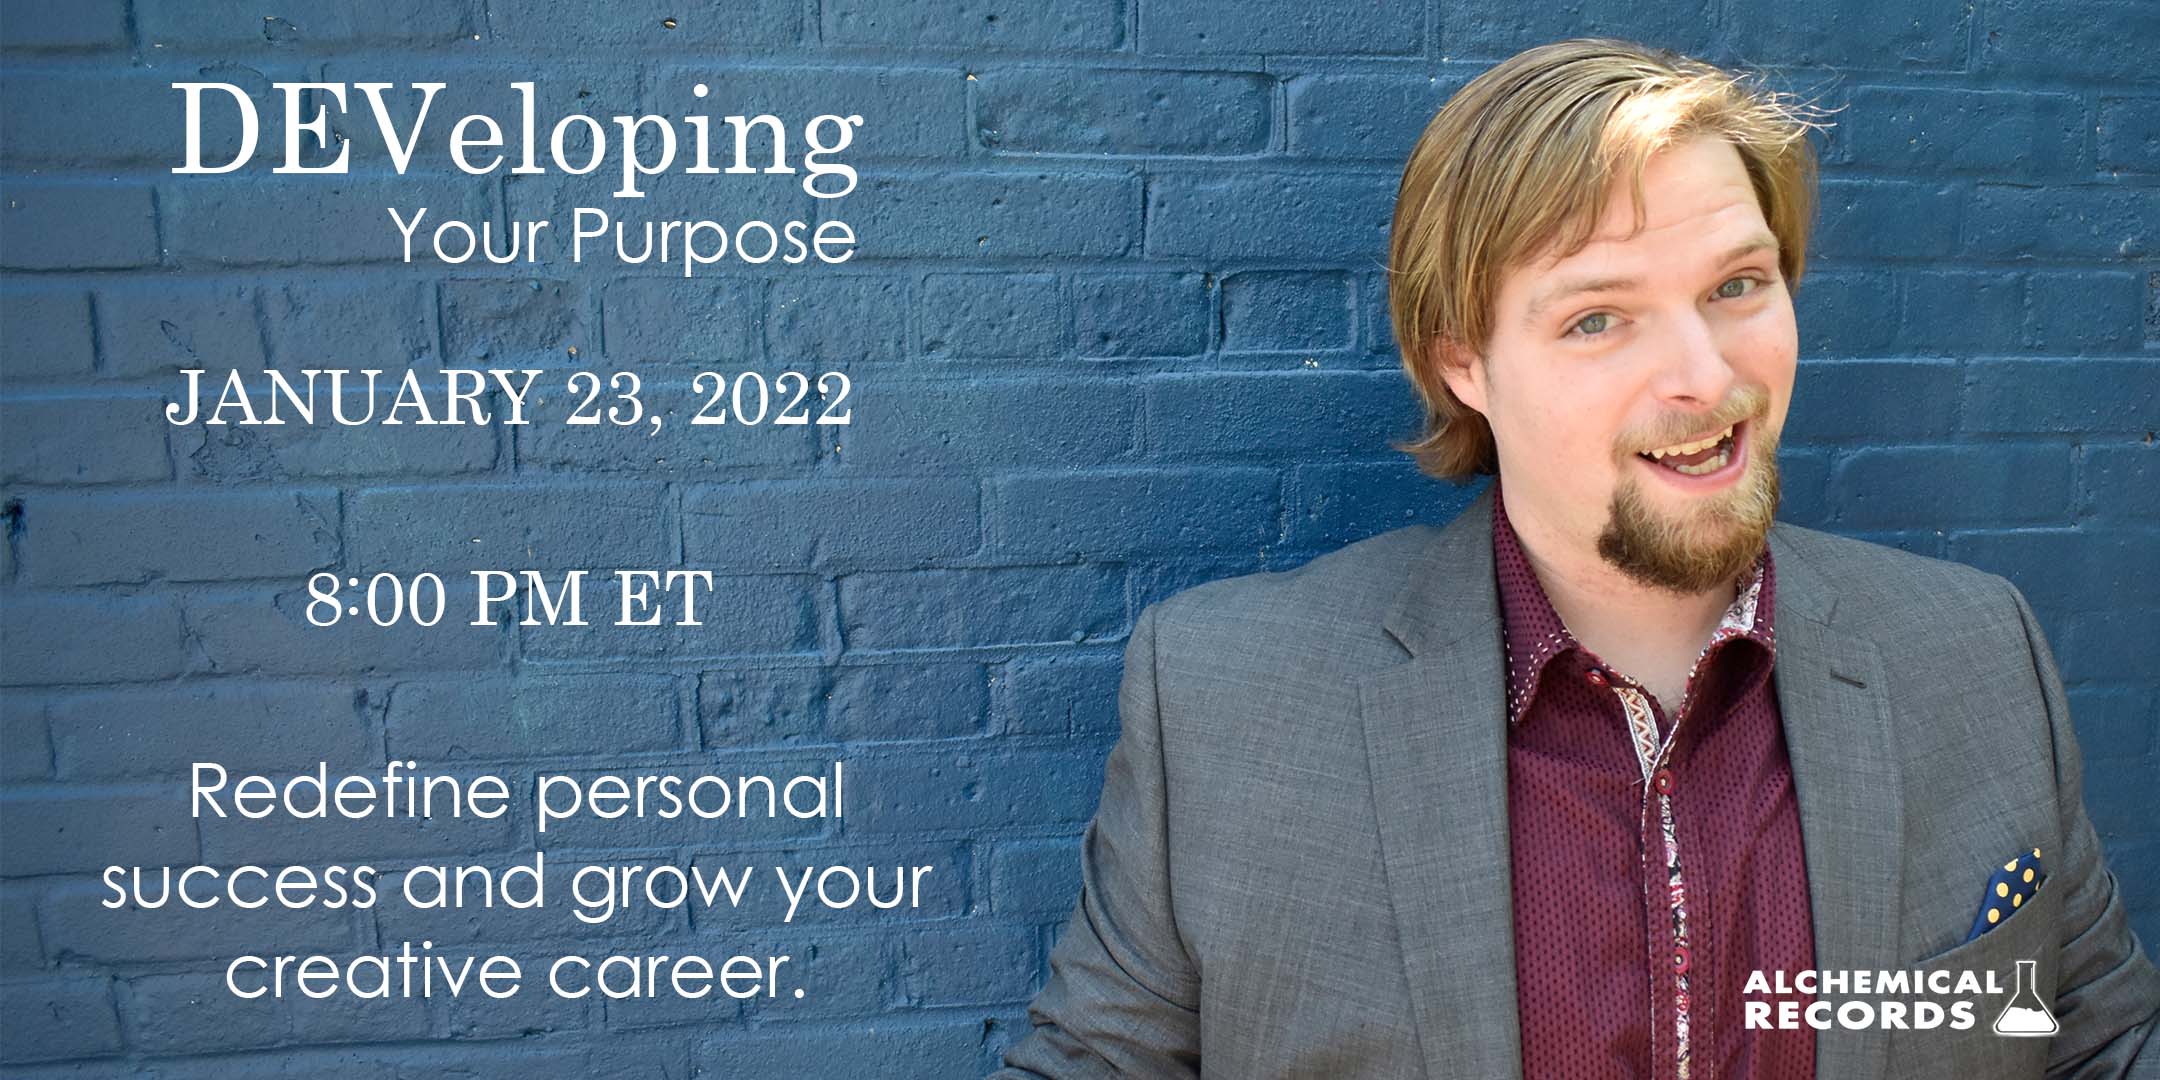 Dev Class 1 - Developing your purpose, with Daniel Warren Hill